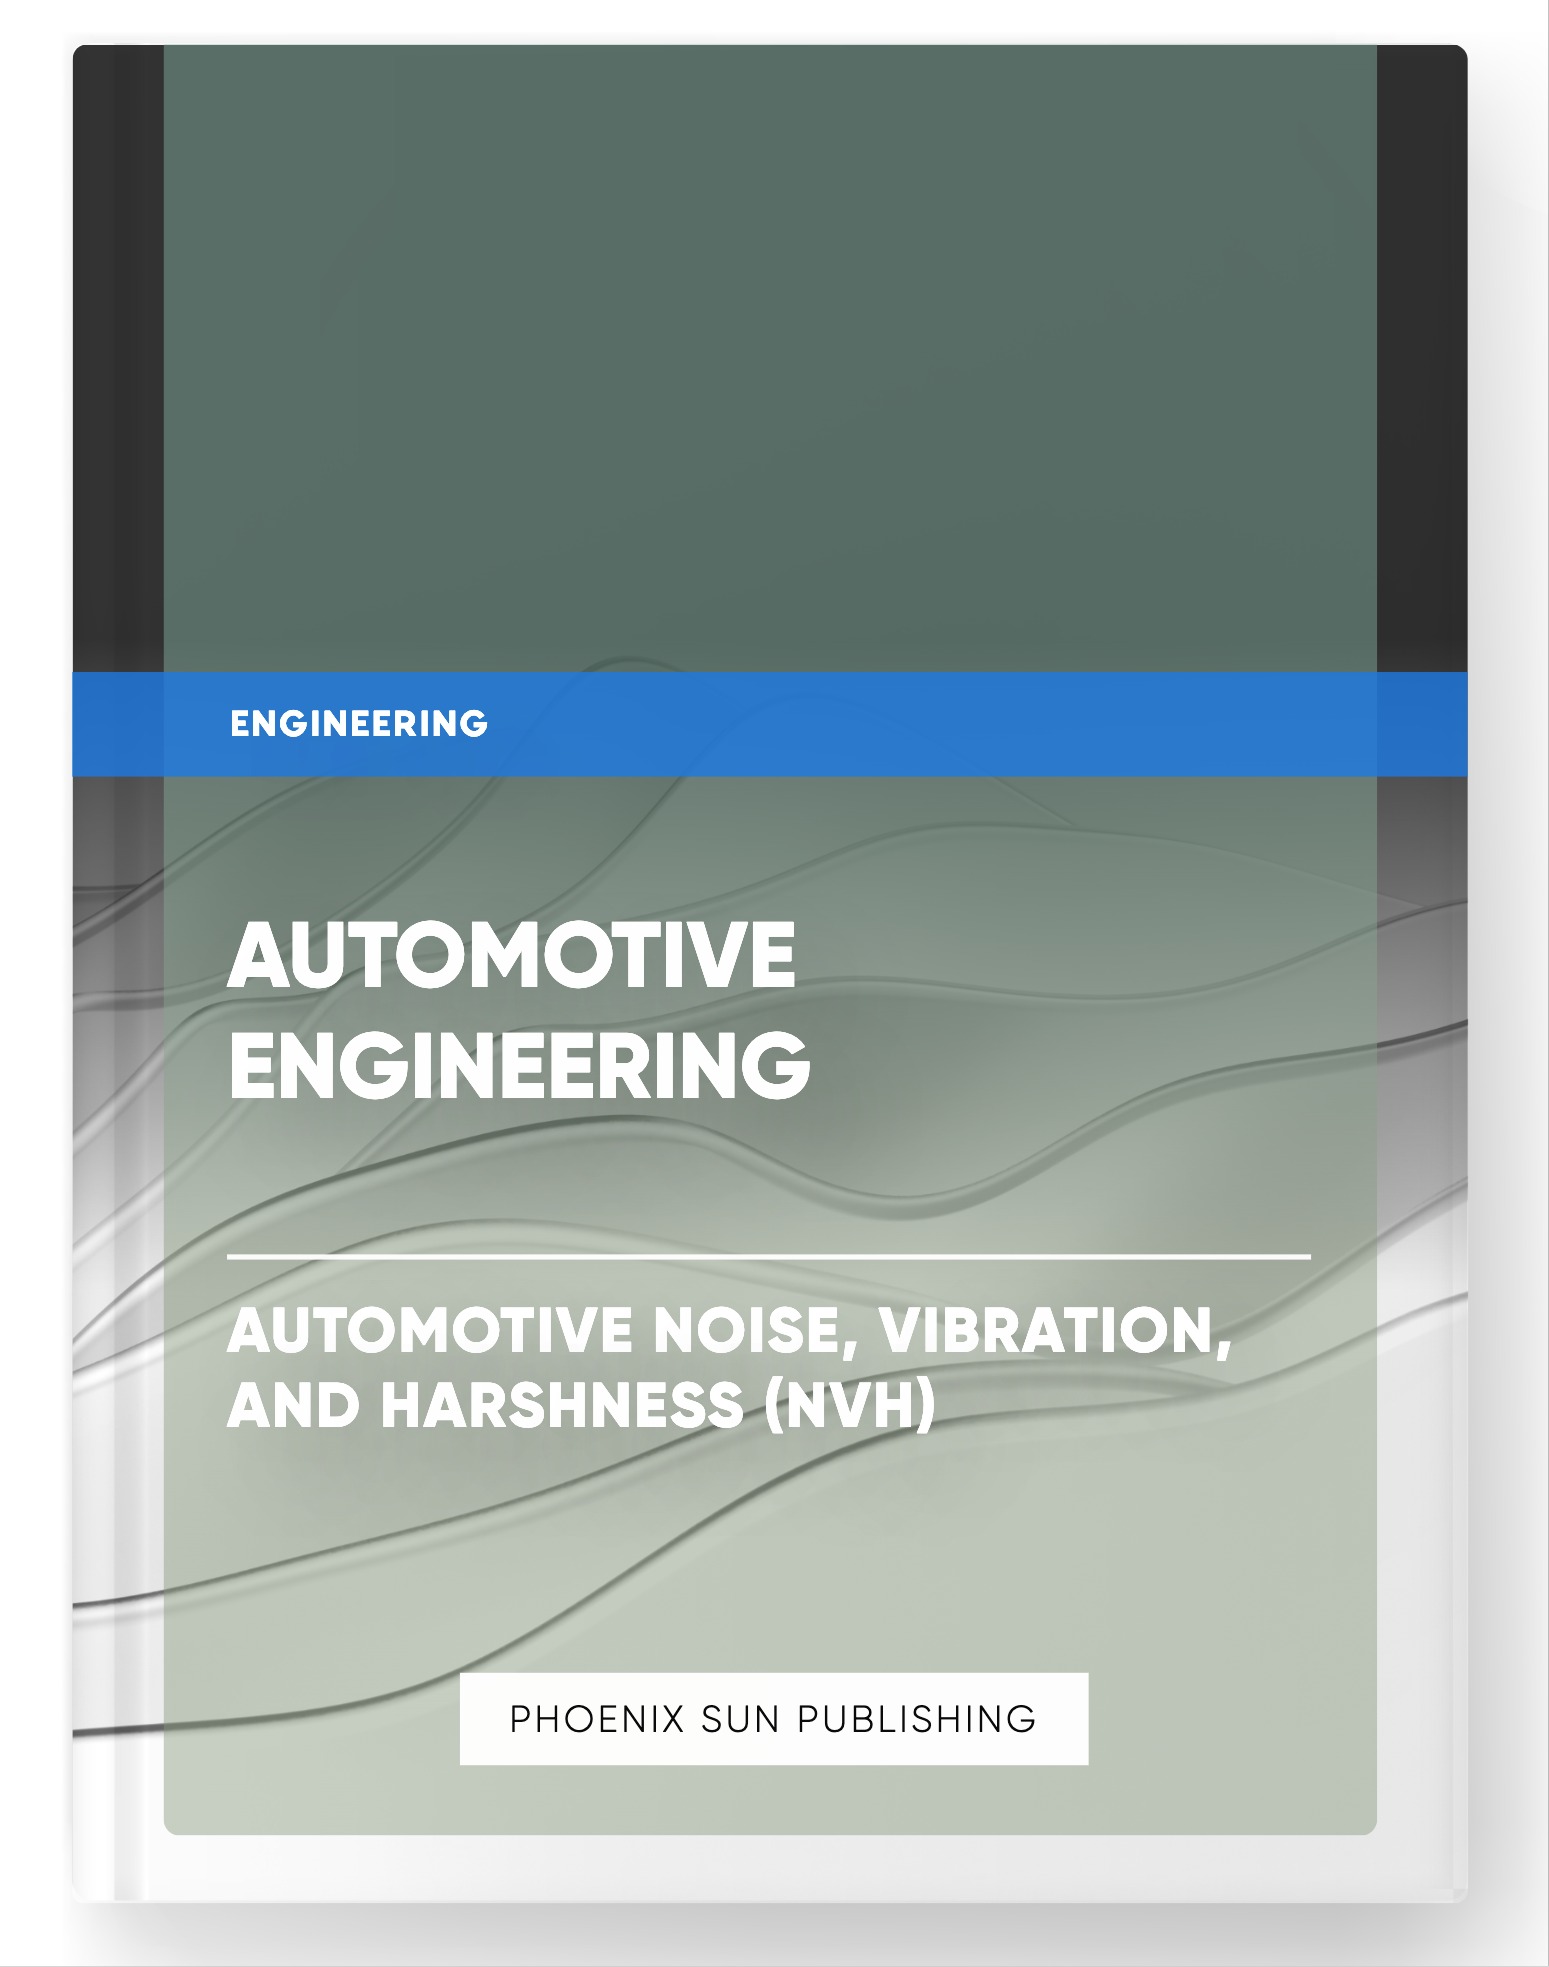 Automotive Engineering – Automotive Noise, Vibration, and Harshness (NVH)